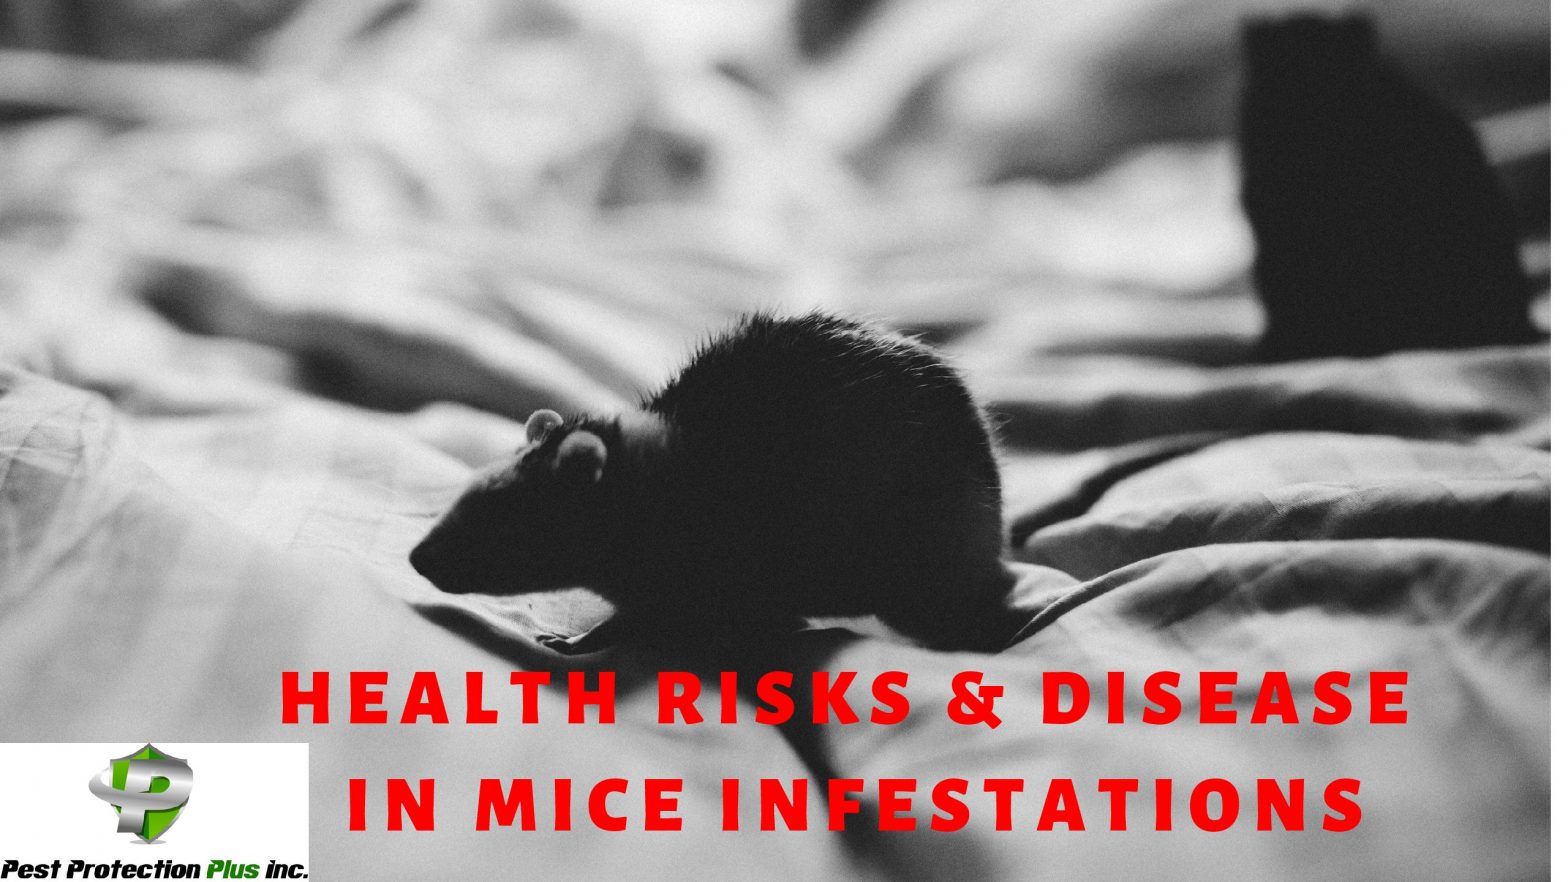 Health risks & disease in mice infestations